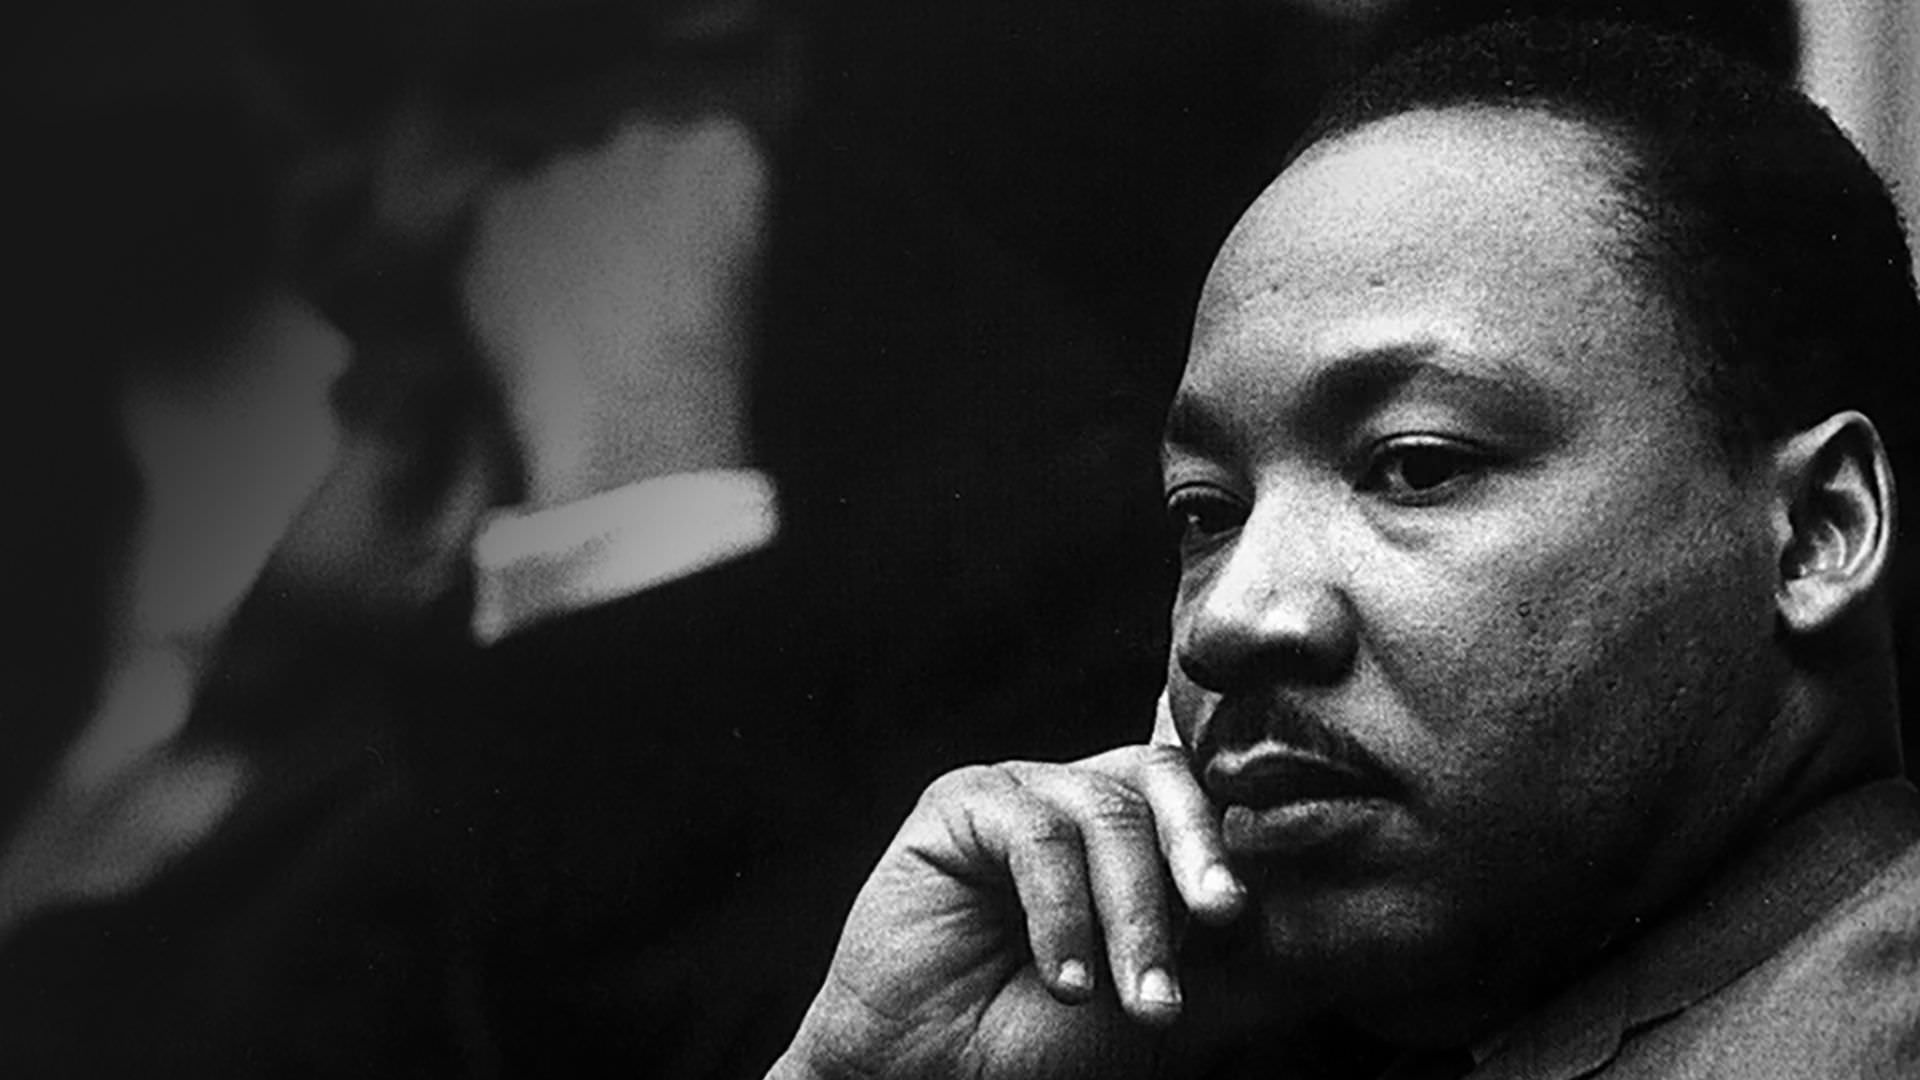 96 Martin Luther King Jr Wallpapers  WallpaperSafari